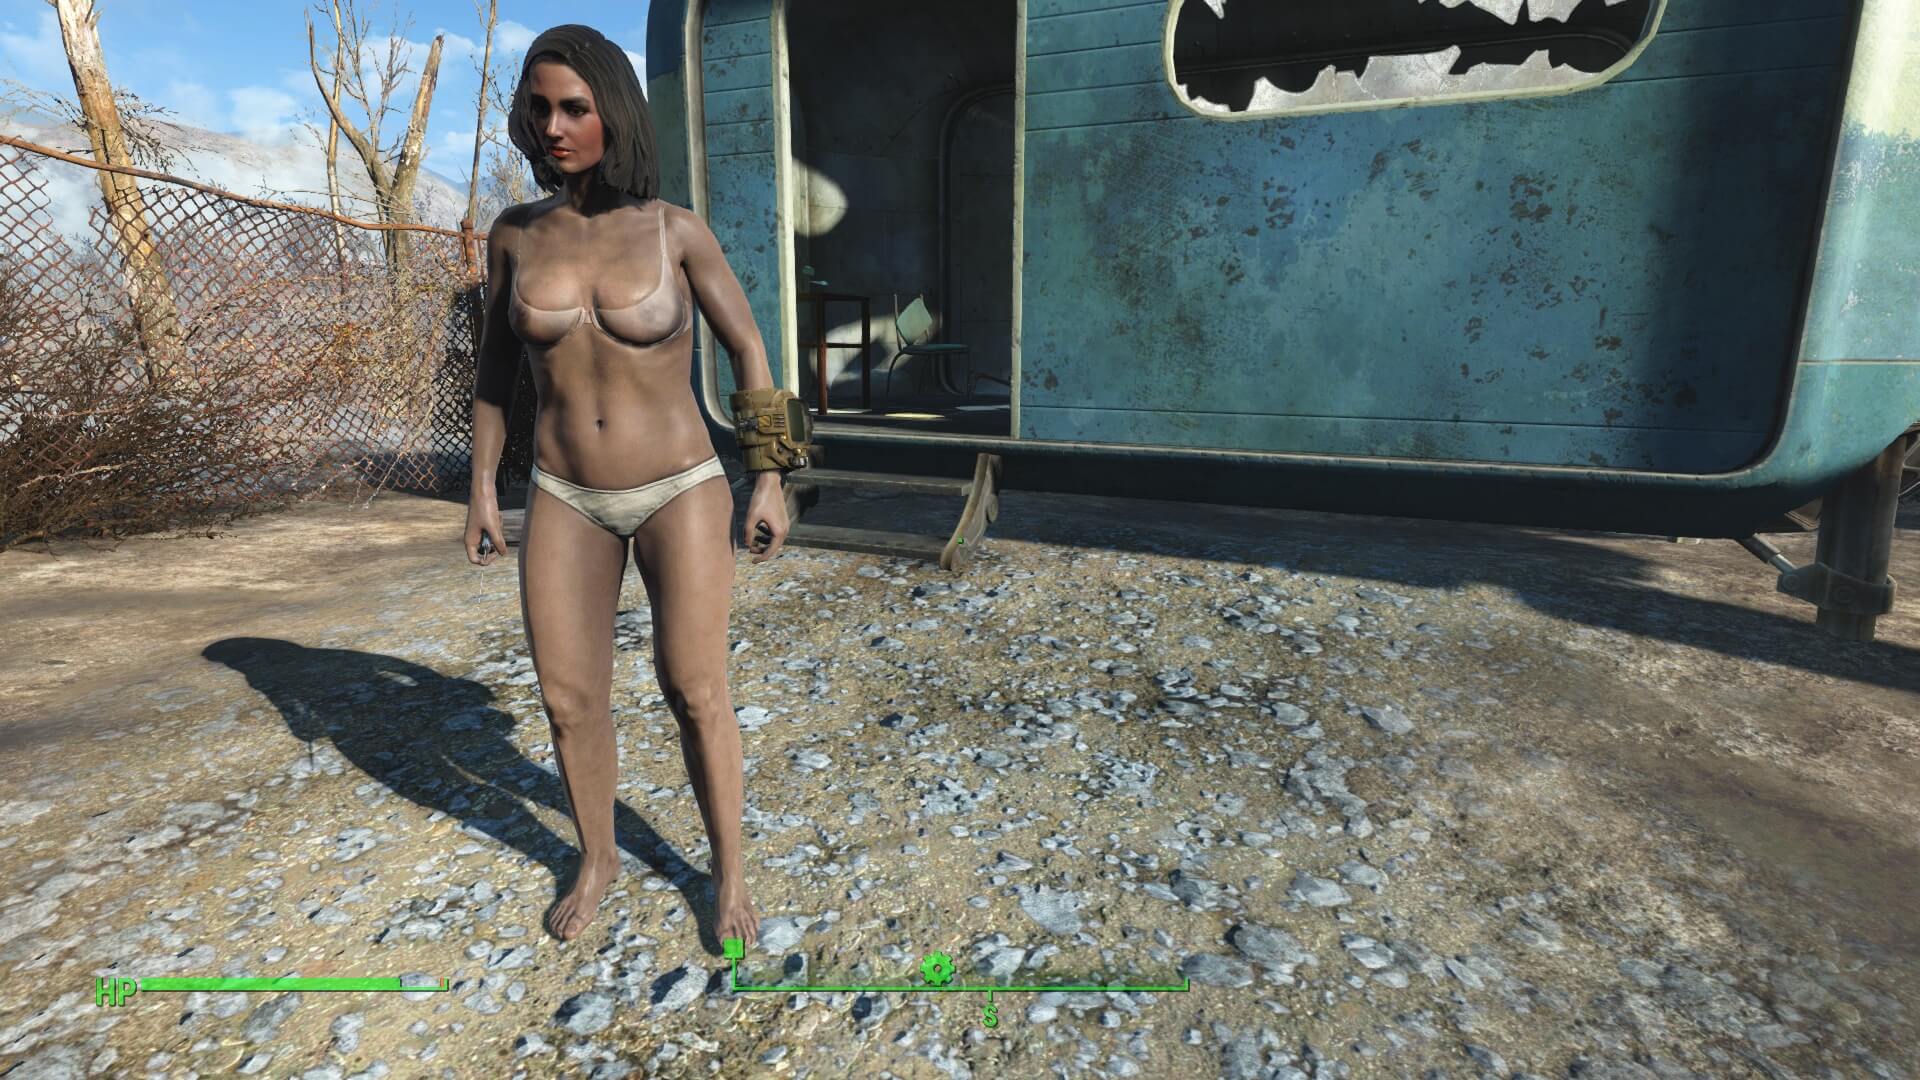 Fallout 4 Already Has Nude Mods.